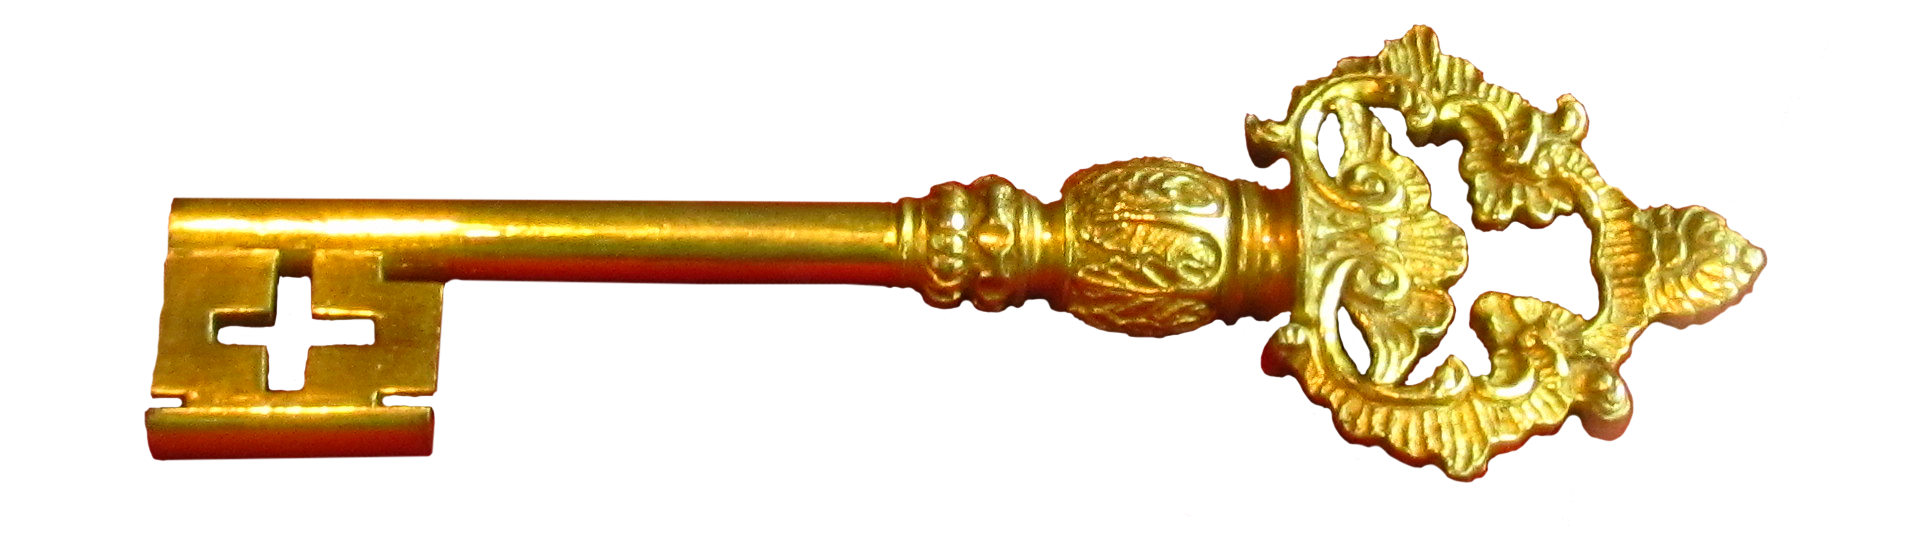 a_golden_key_by_amalus-d4v6gen.png